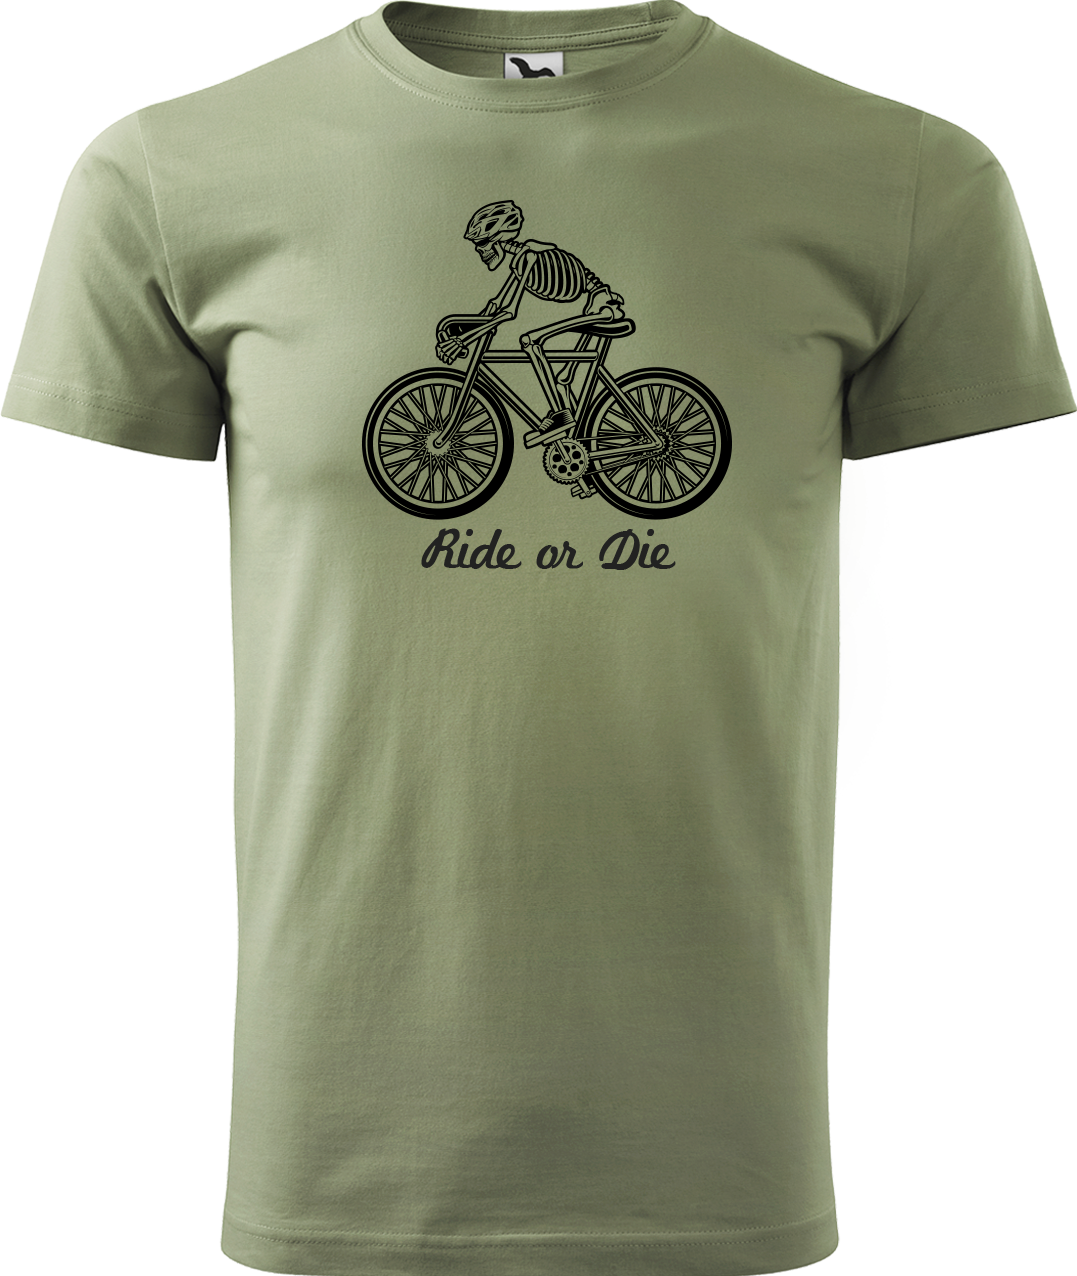 Pánské tričko pro cyklistu - Ride or Die Velikost: 4XL, Barva: Světlá khaki (28)